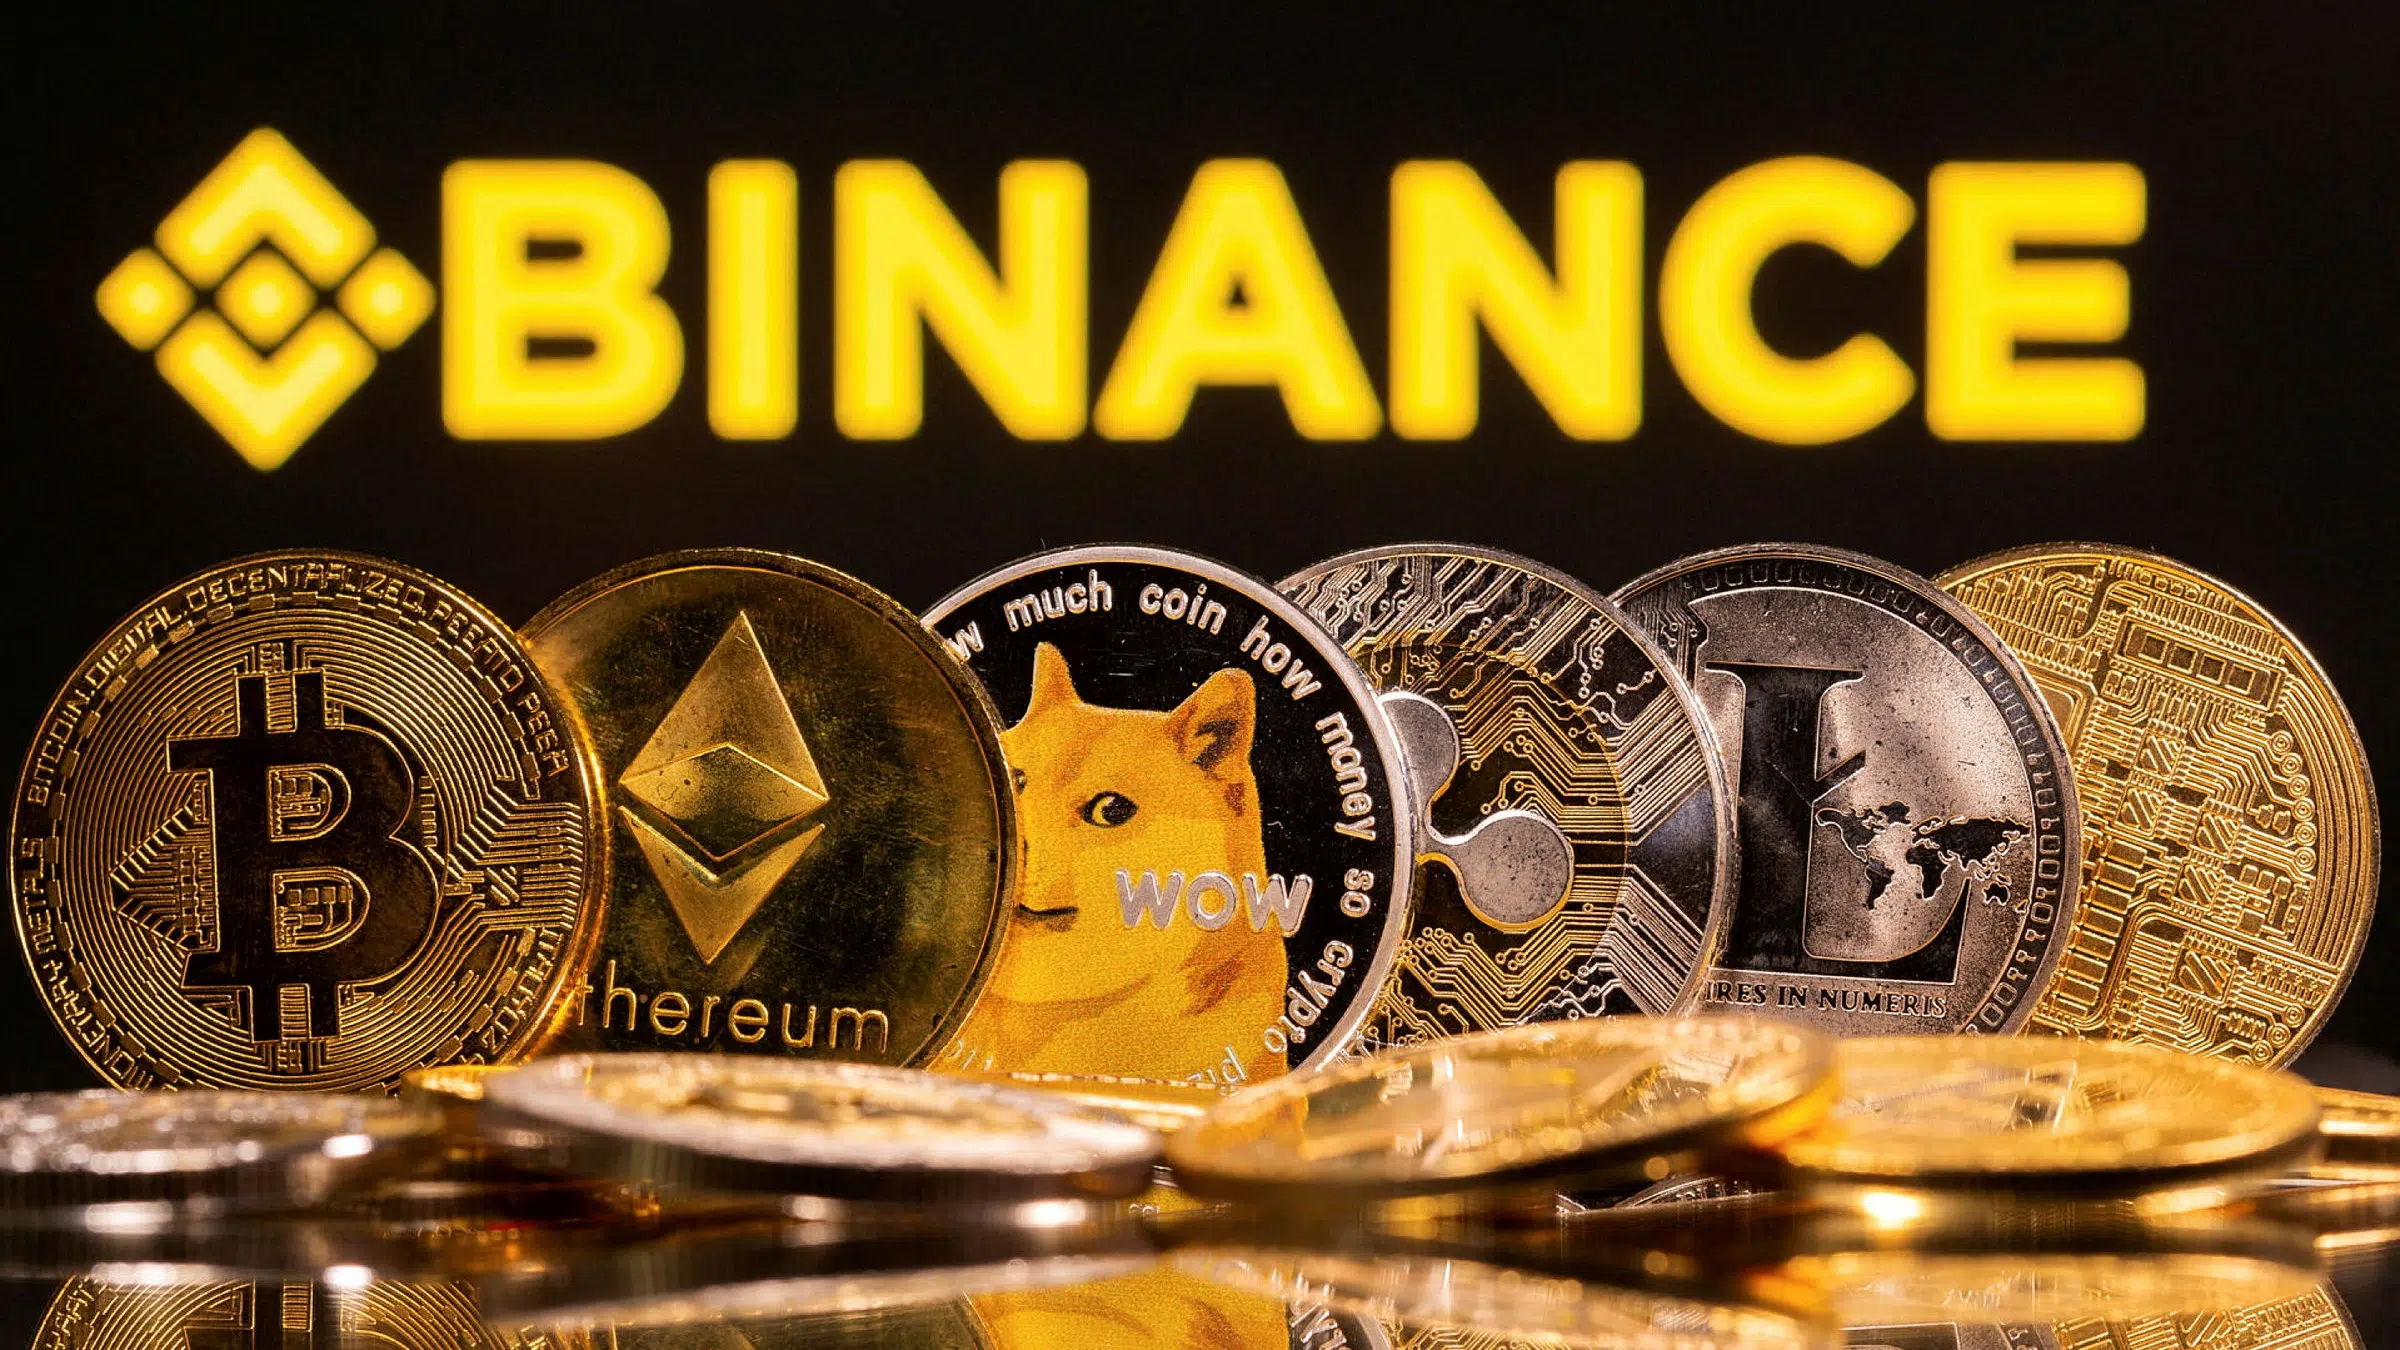 Binance - Top cryptocurrency exchange